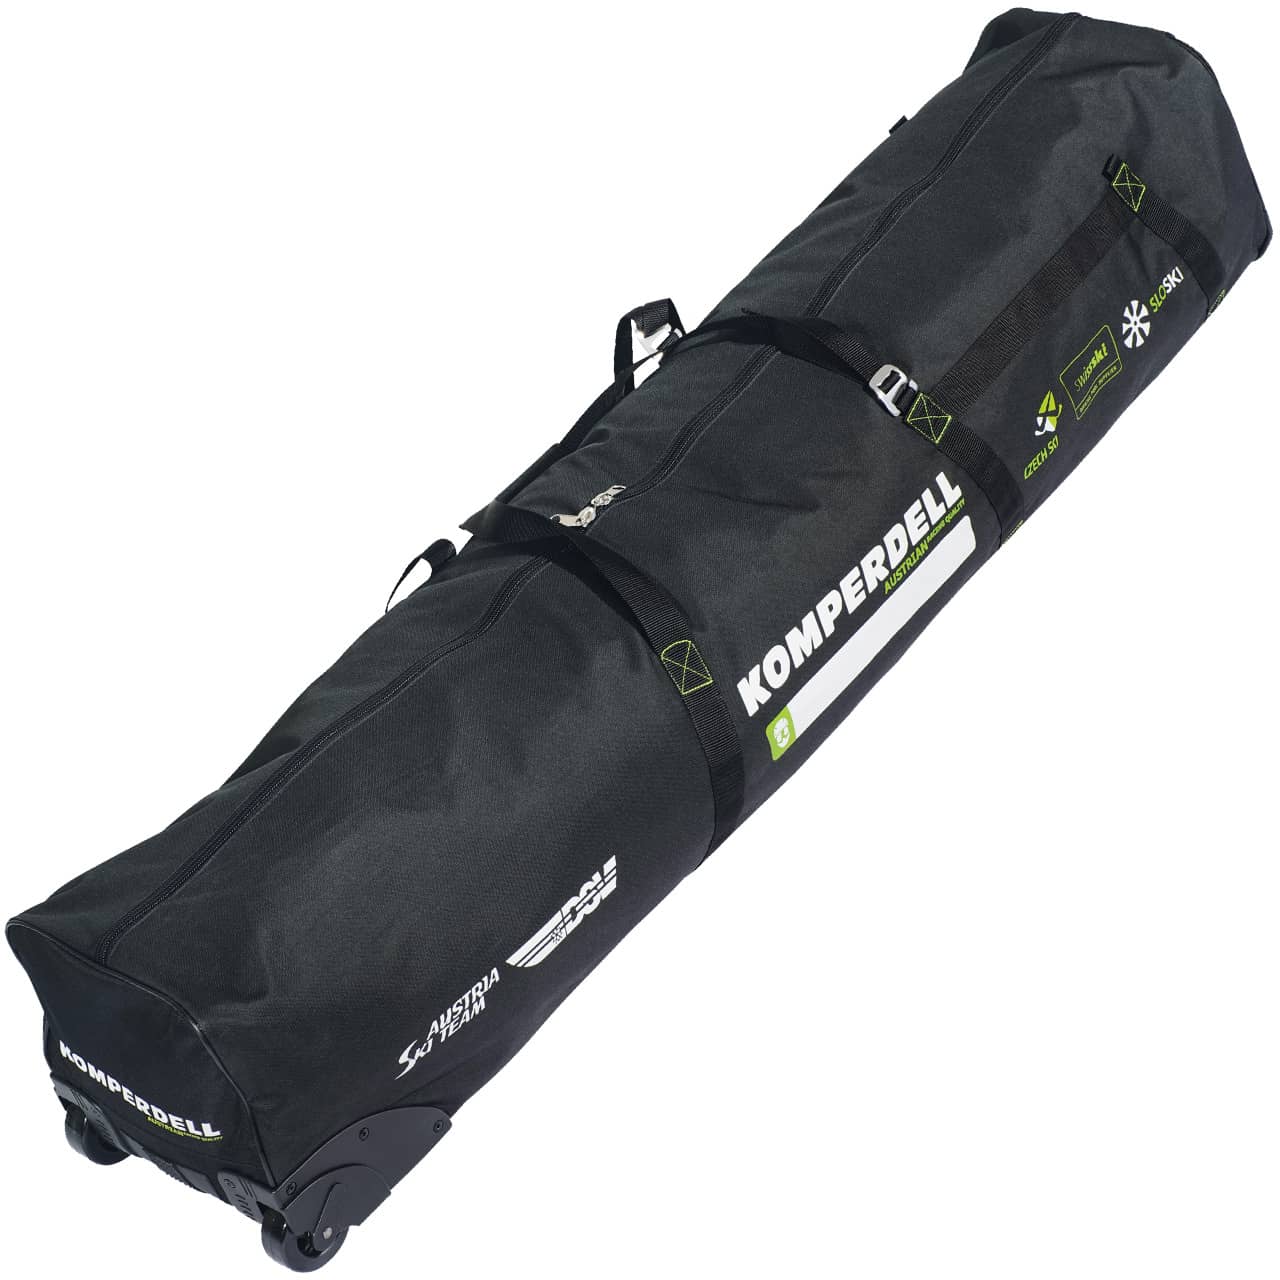 Nationalteam Expandable Pole & Ski Bag with Wheels